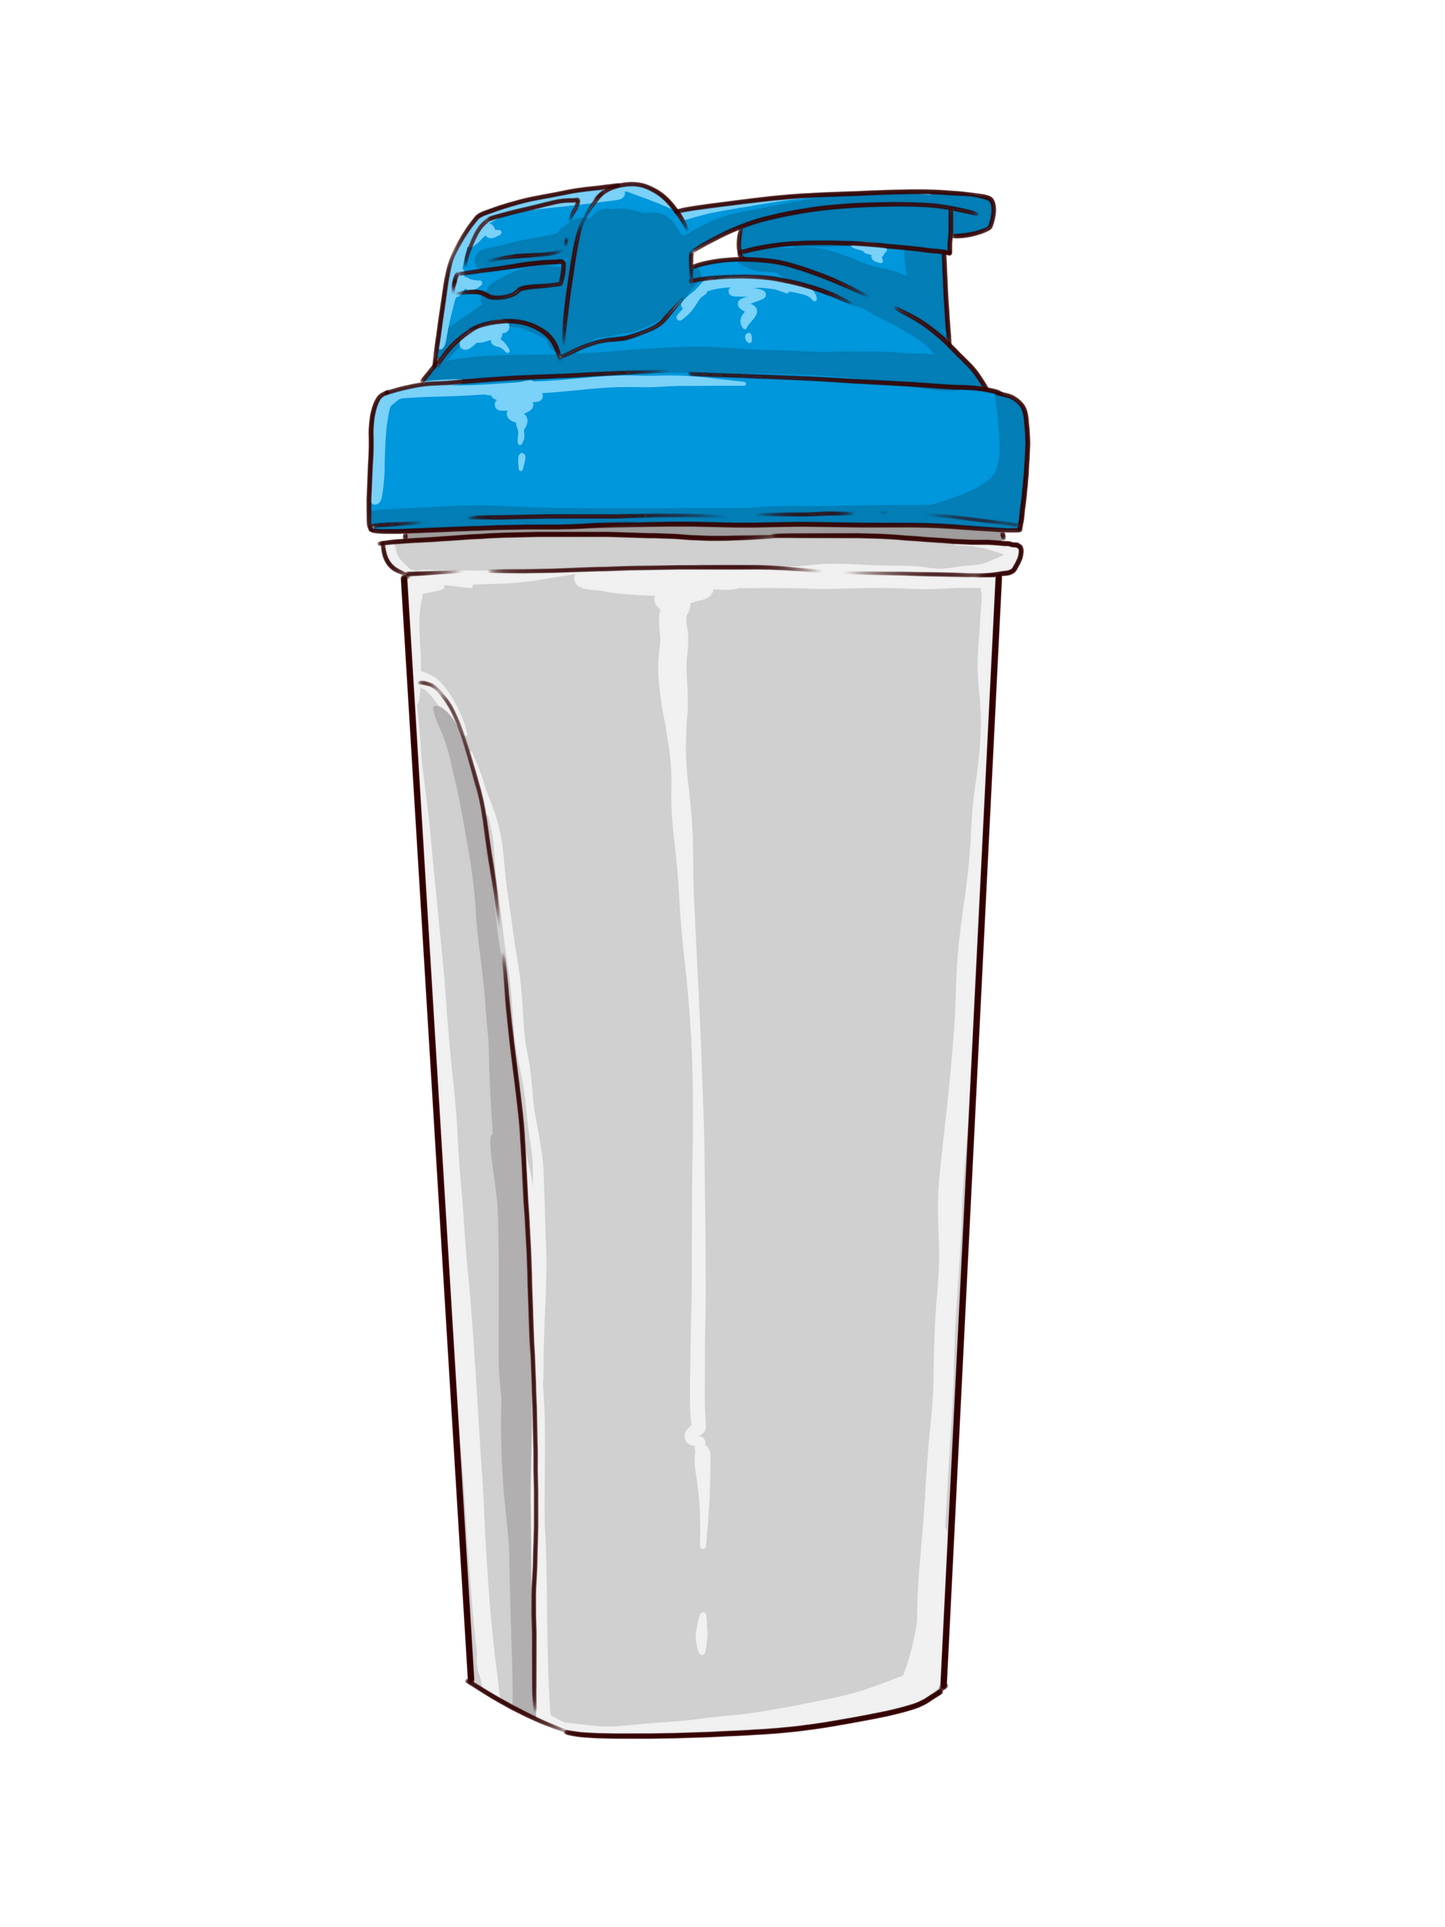 Protein Shaker Air Freshener